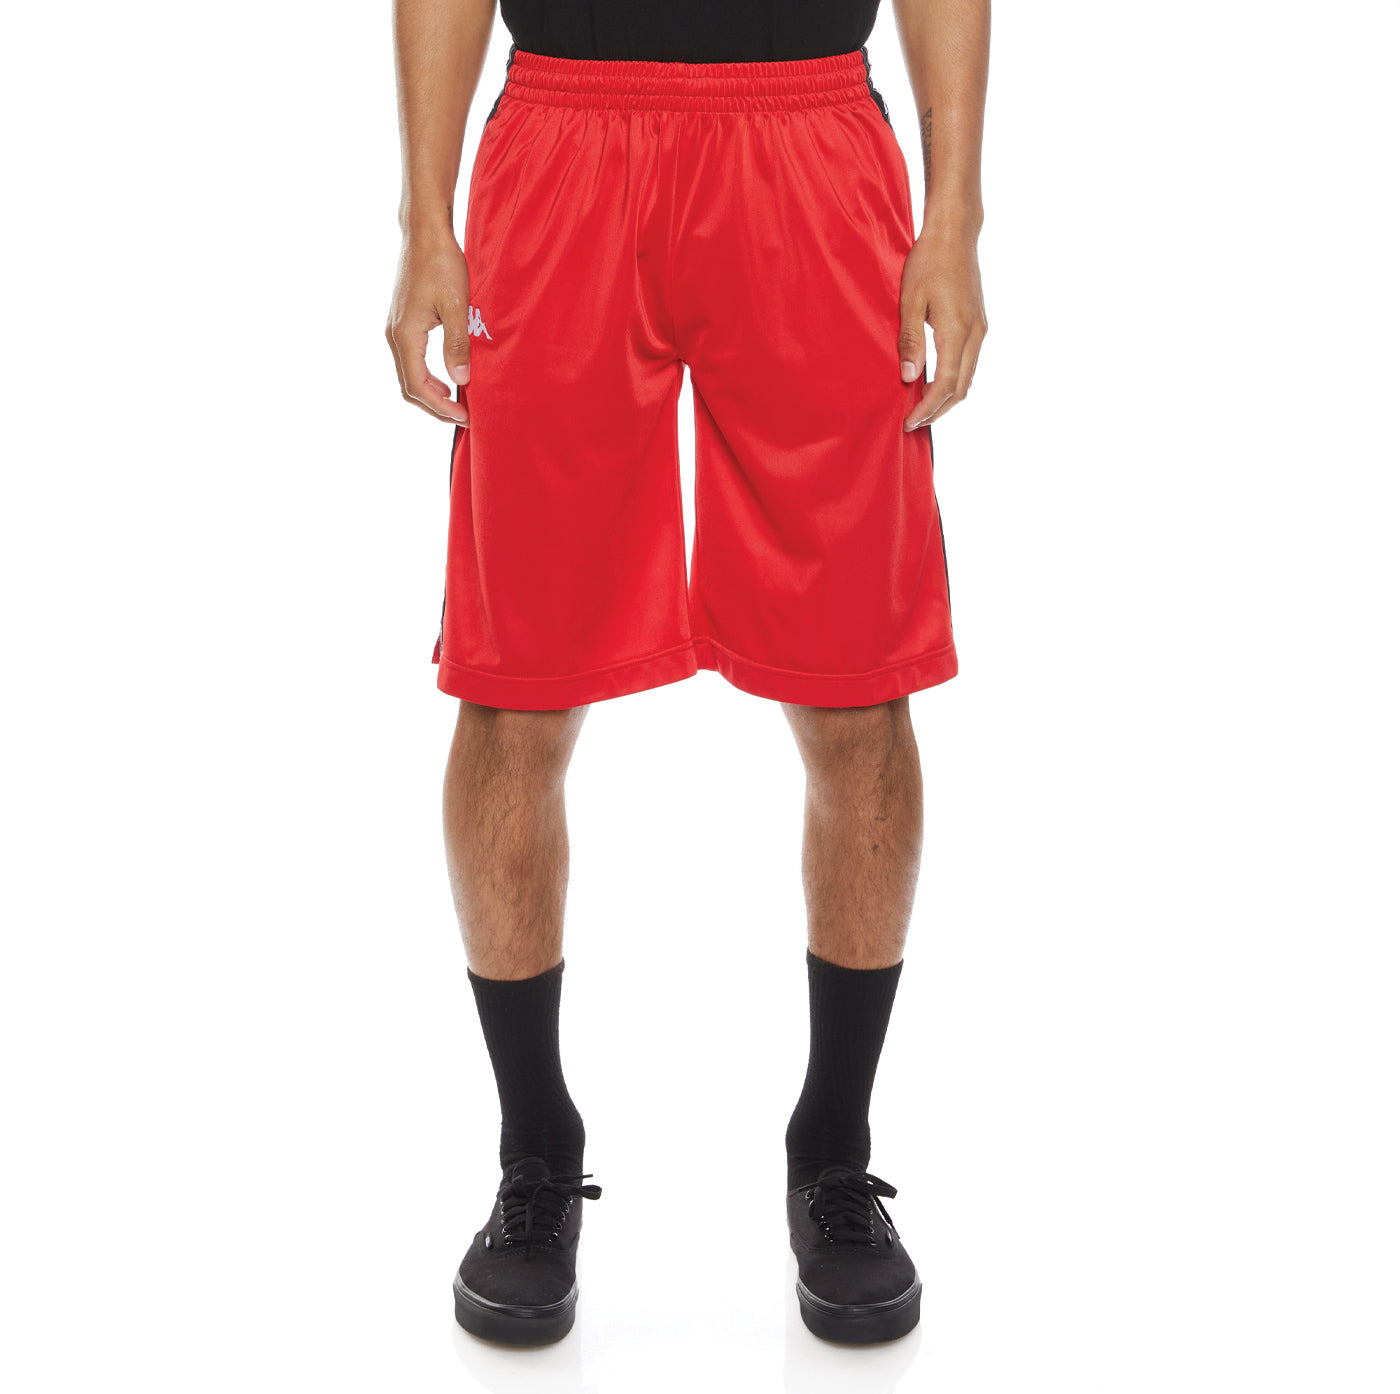 222 Banda Treadwellz Shorts - Red Black